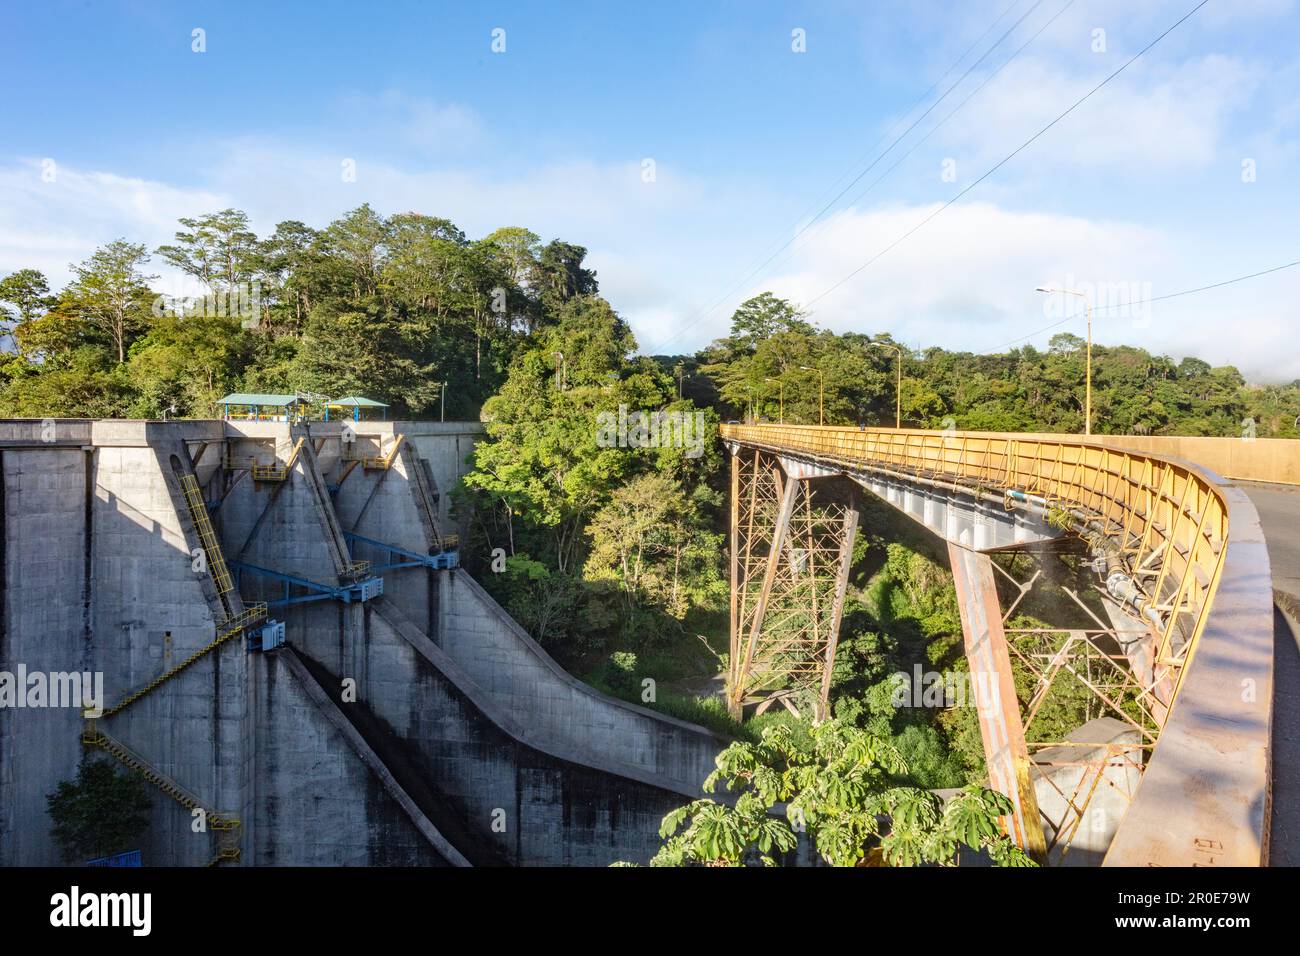 The Cachi dam wall for power generation, Valle de Orosi, Costa Rica, Central America Stock Photo